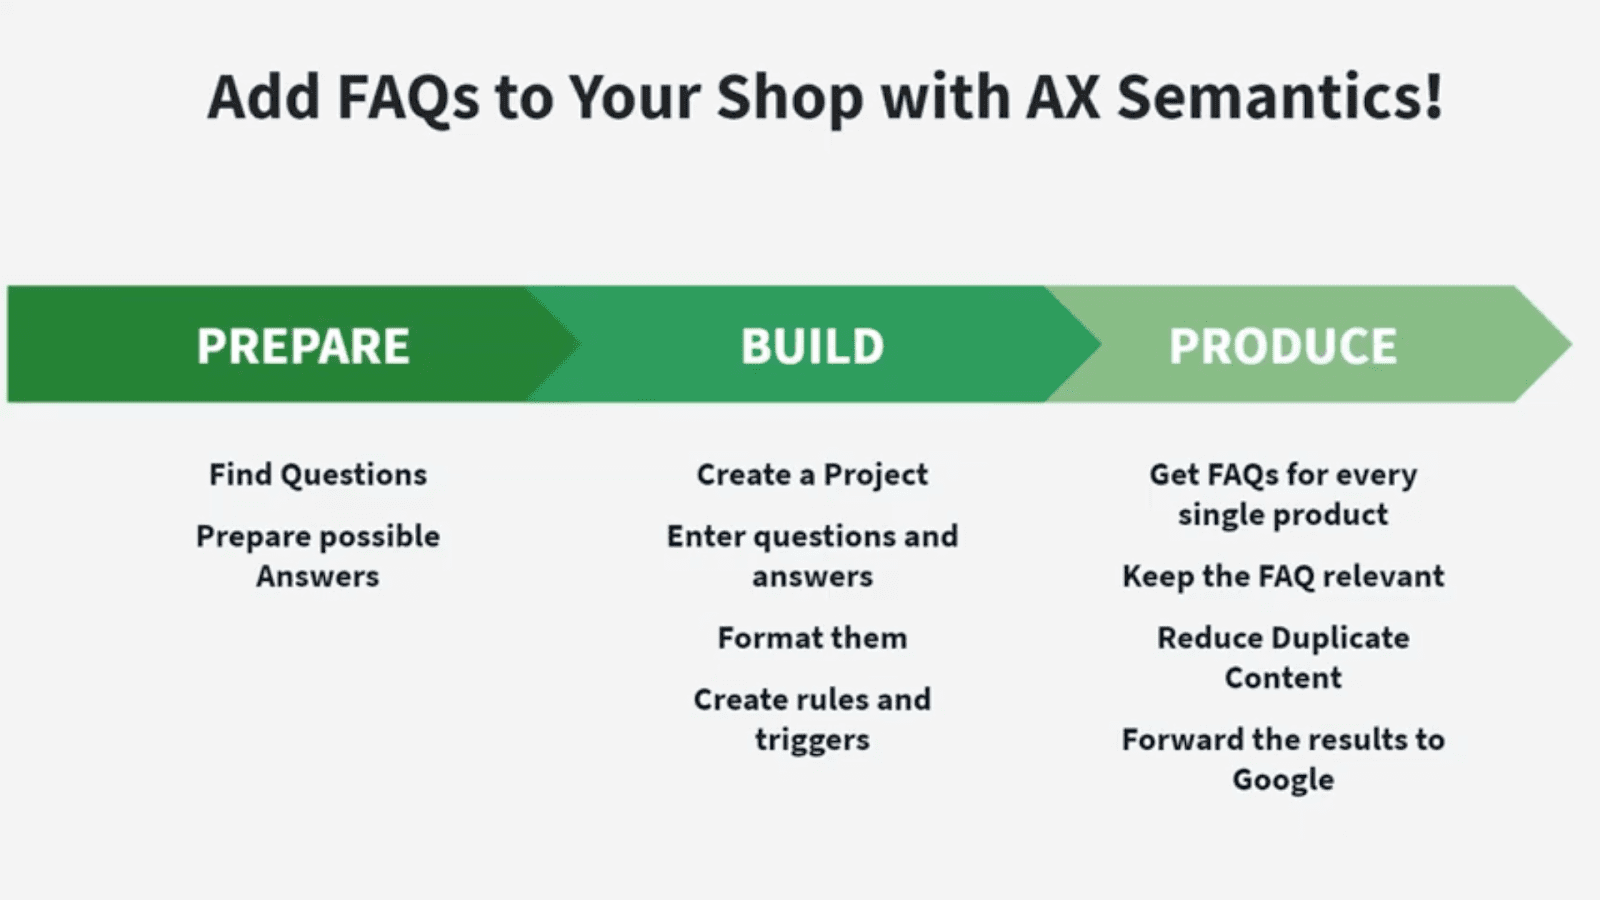 Automating FAQs with AX Semantics